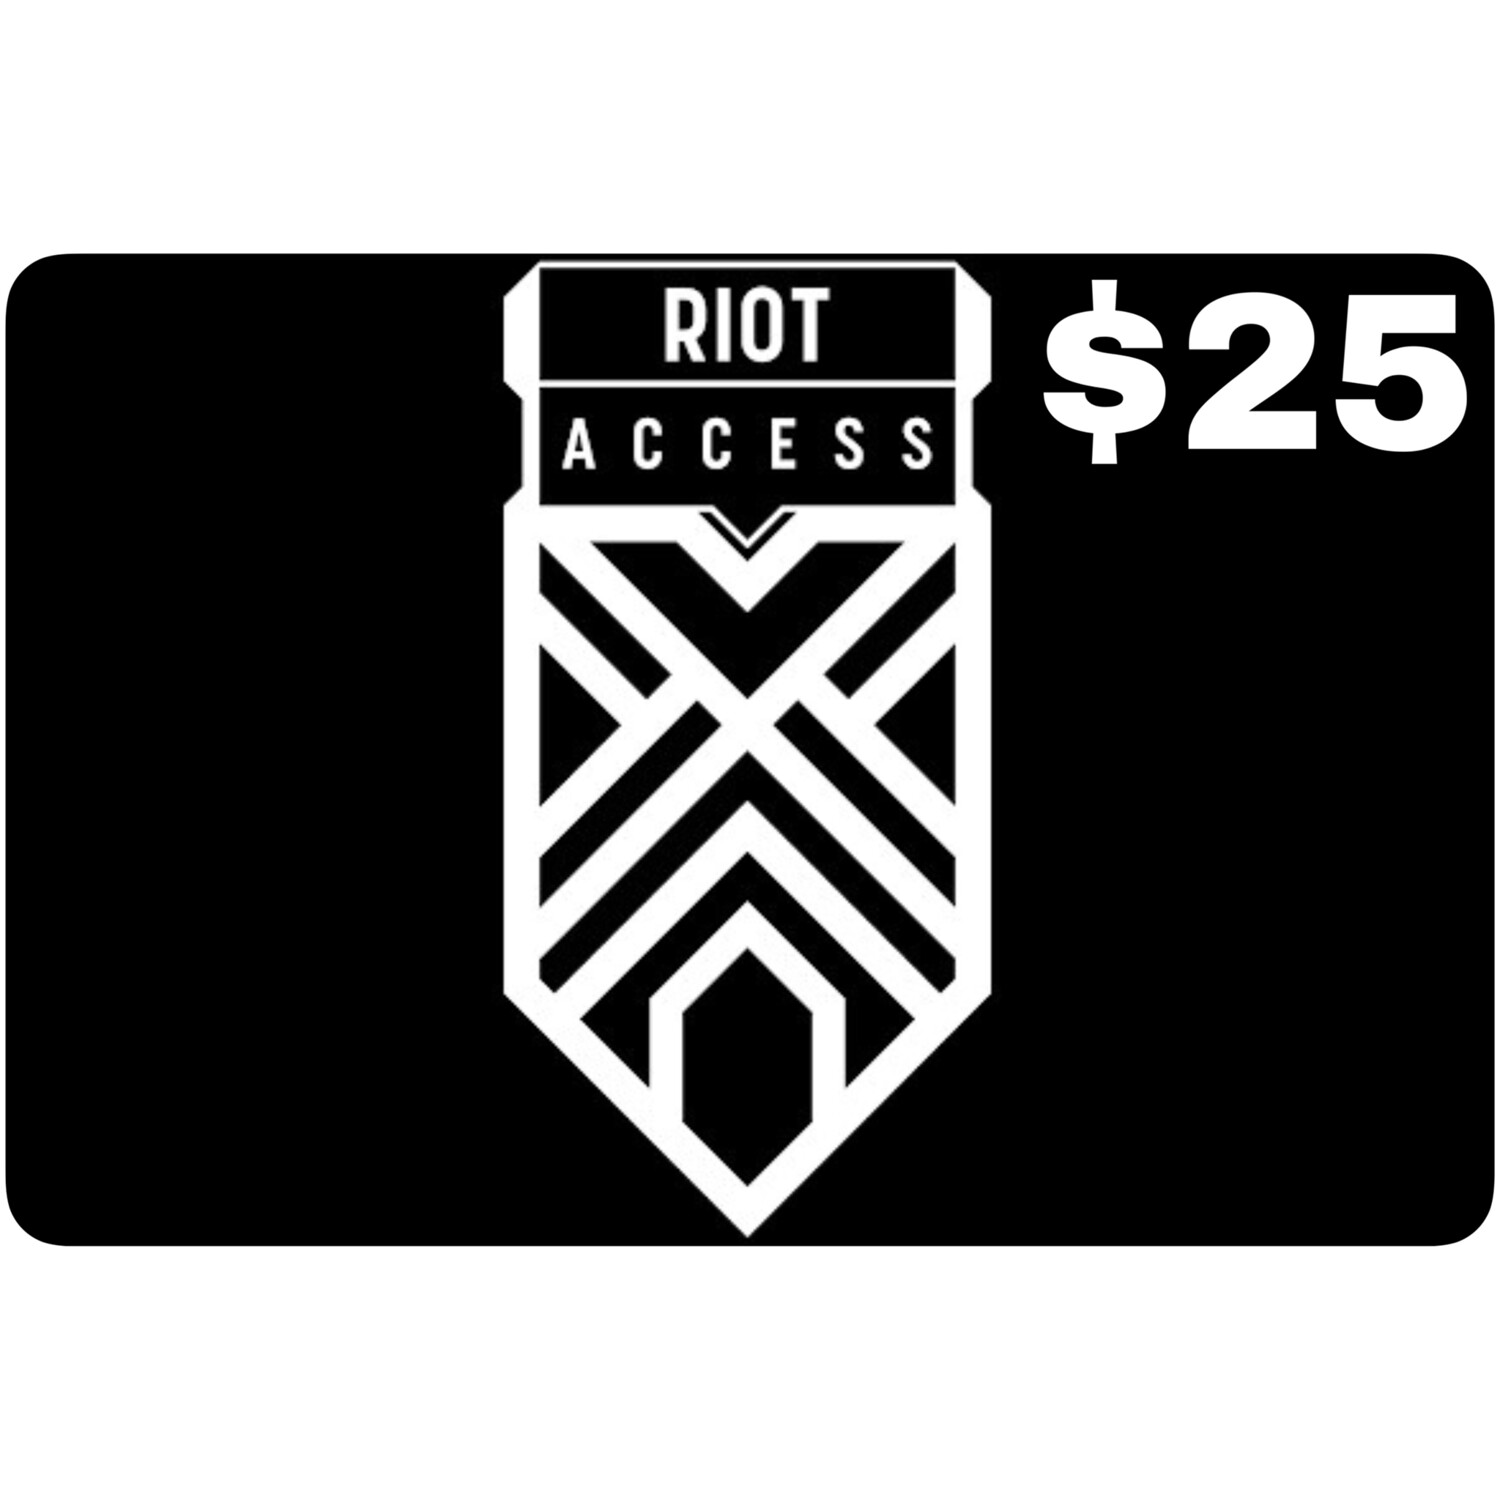 Riot Access Code $25 (NA Server)